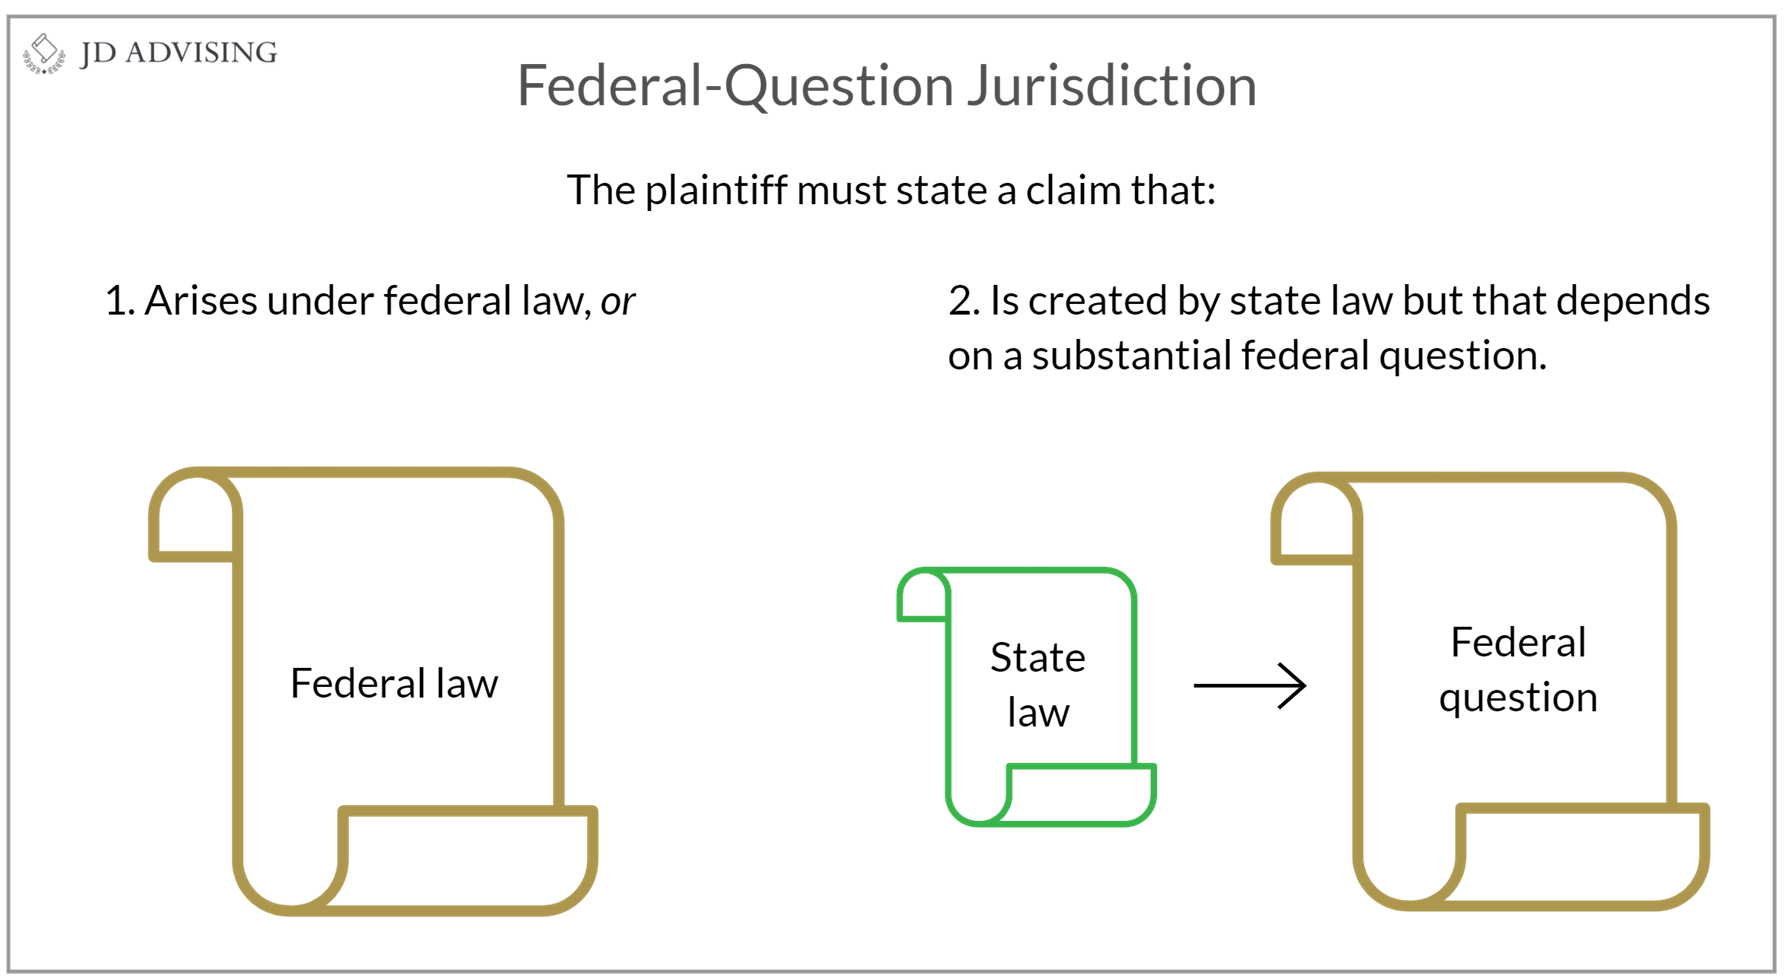 Federal-question jurisdiction